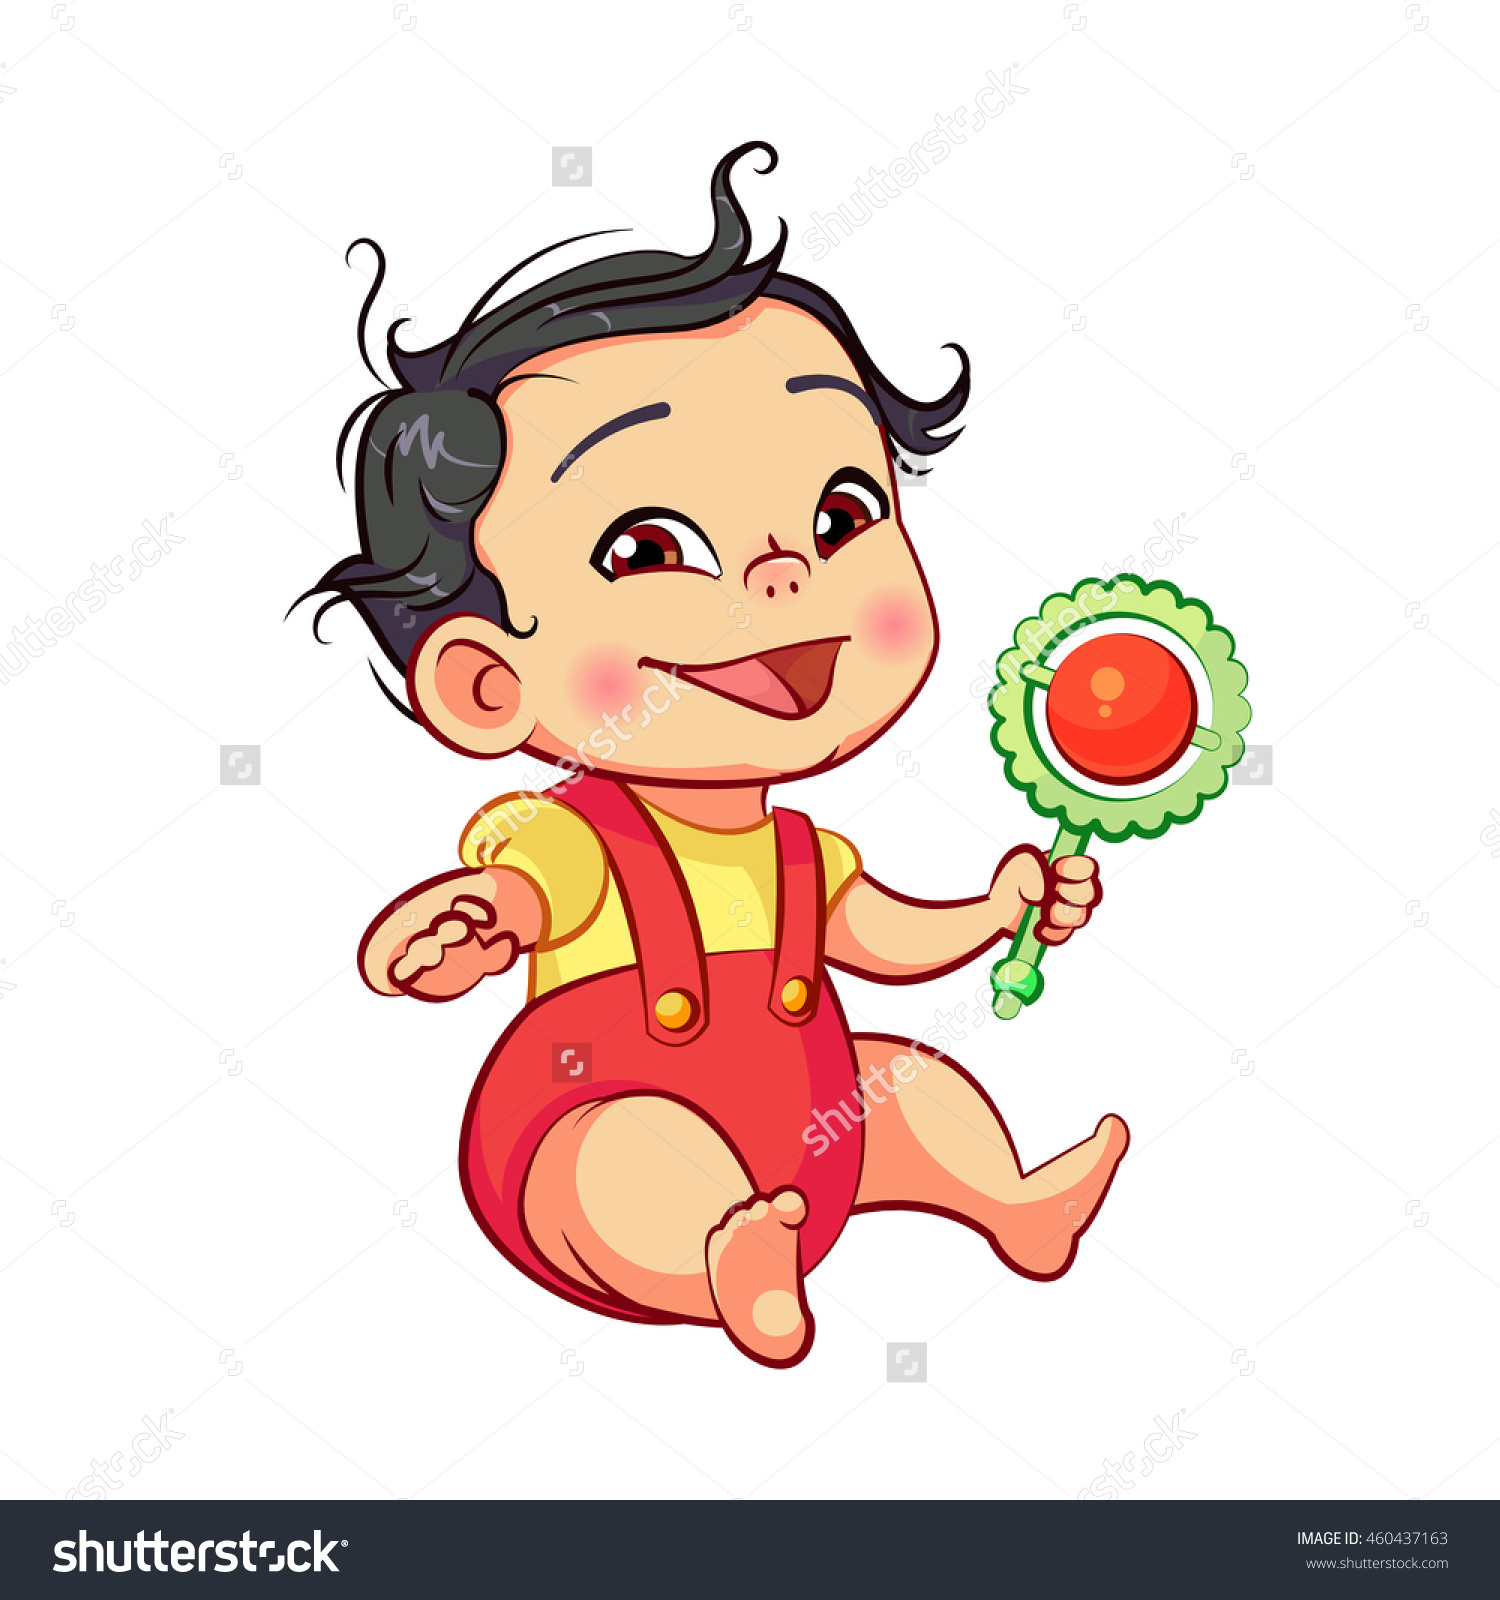 Asian baby clip art